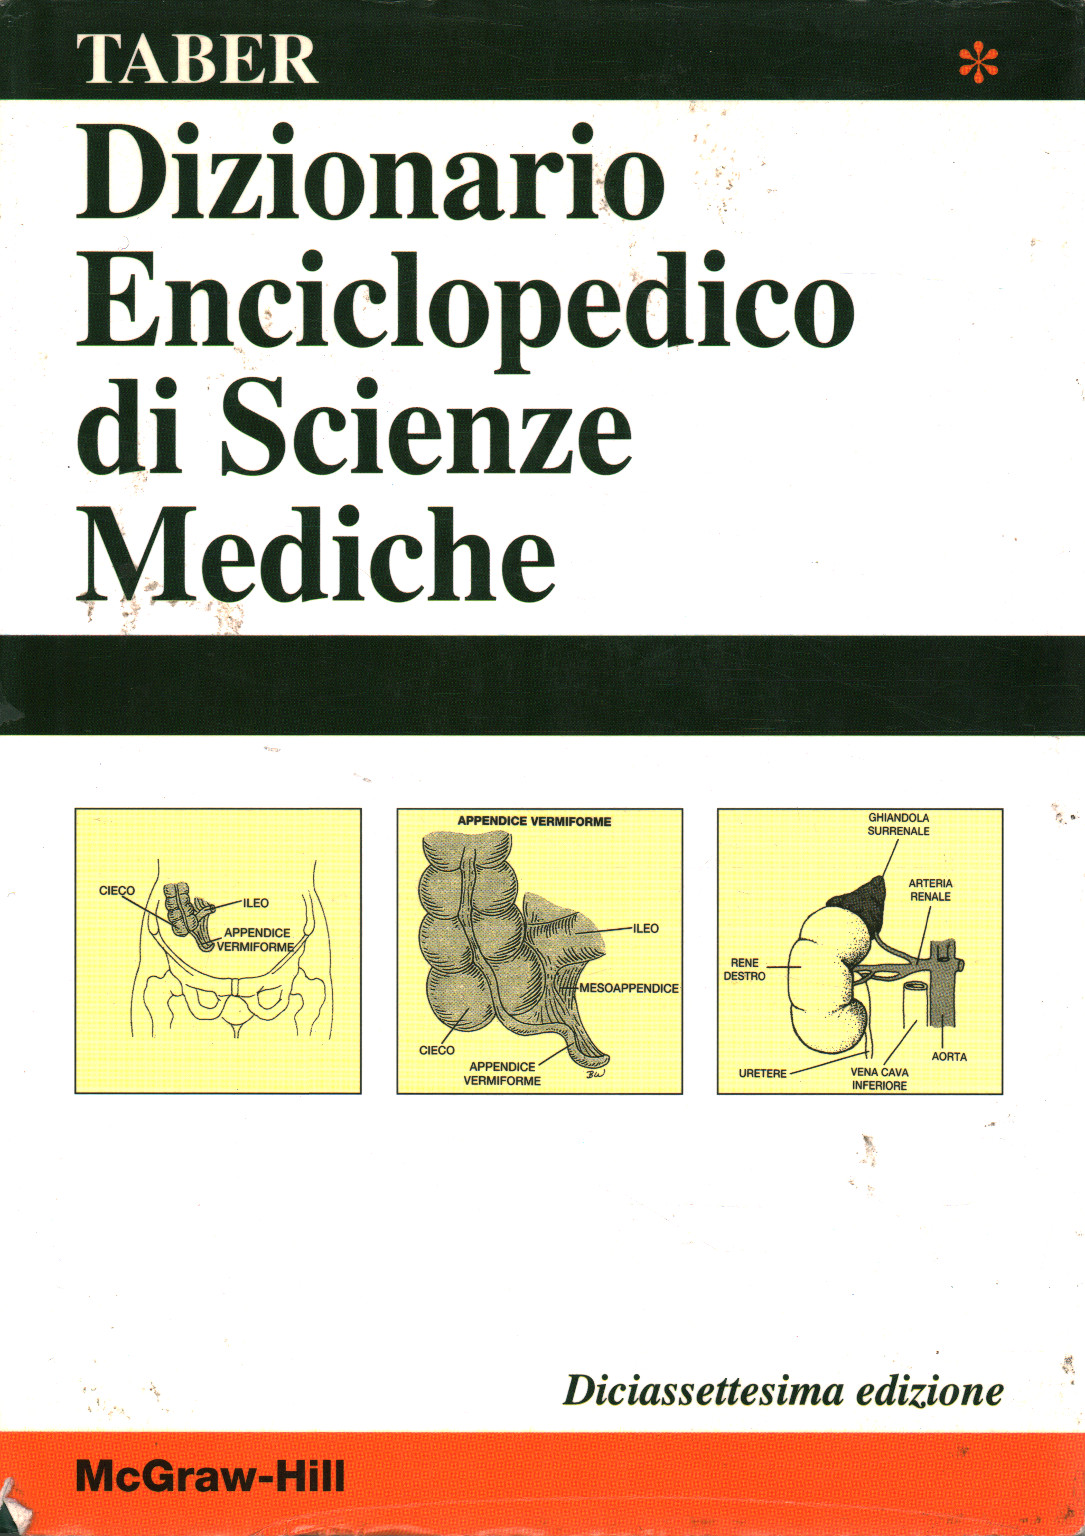 Encyclopedic Dictionary of Medical Sciences. Volum, Clayton L. Thomas